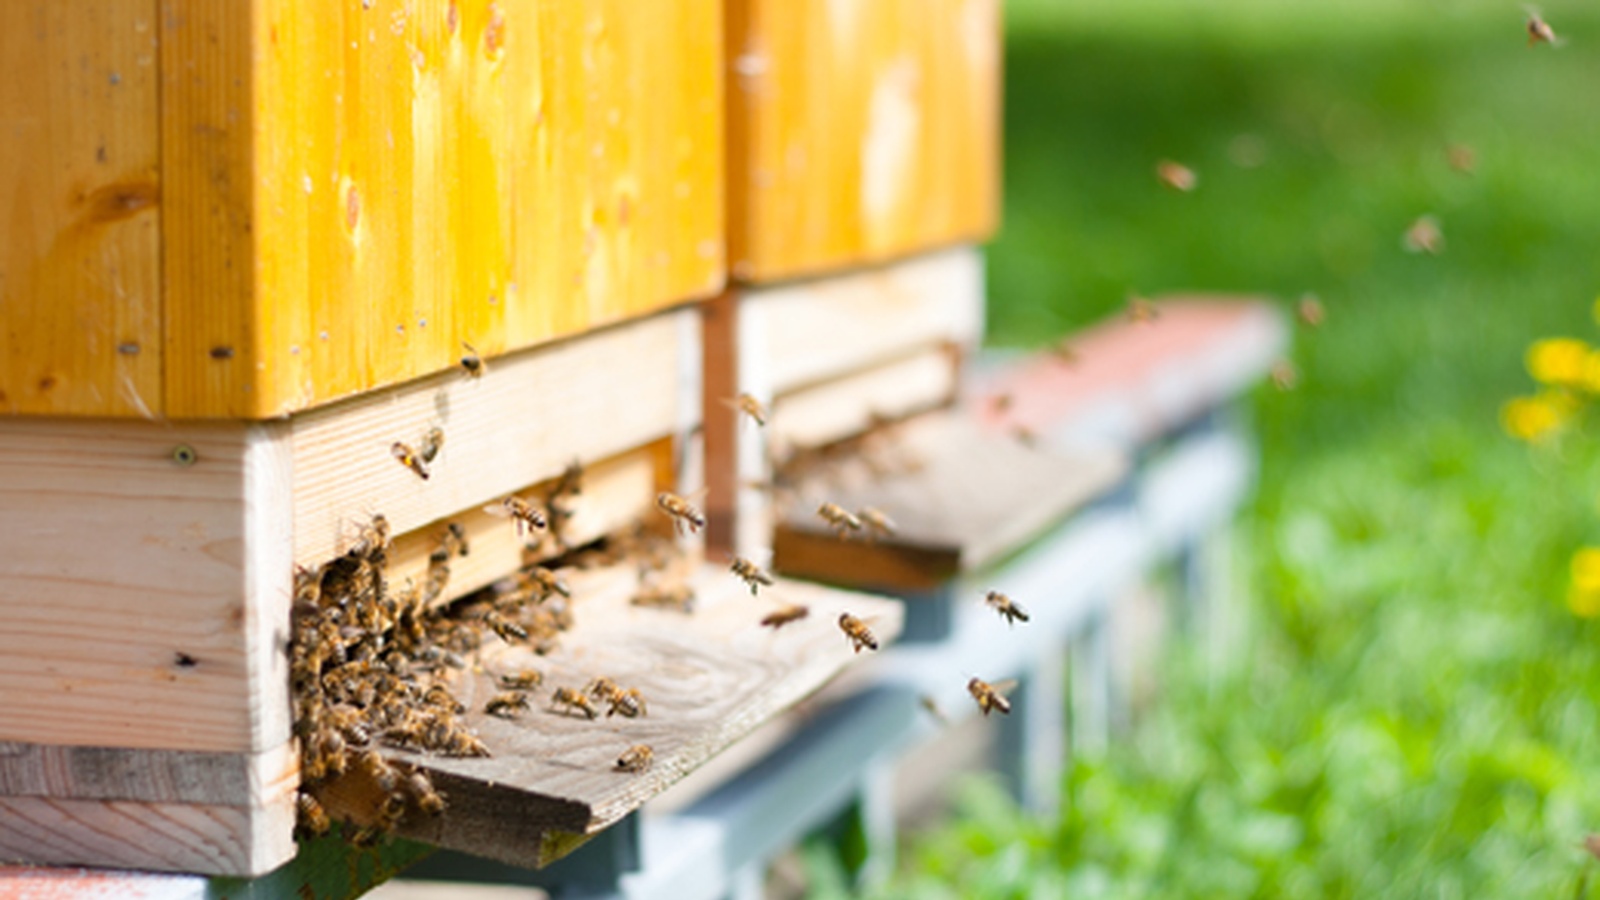 10 Surprising Statistics About Honeybees